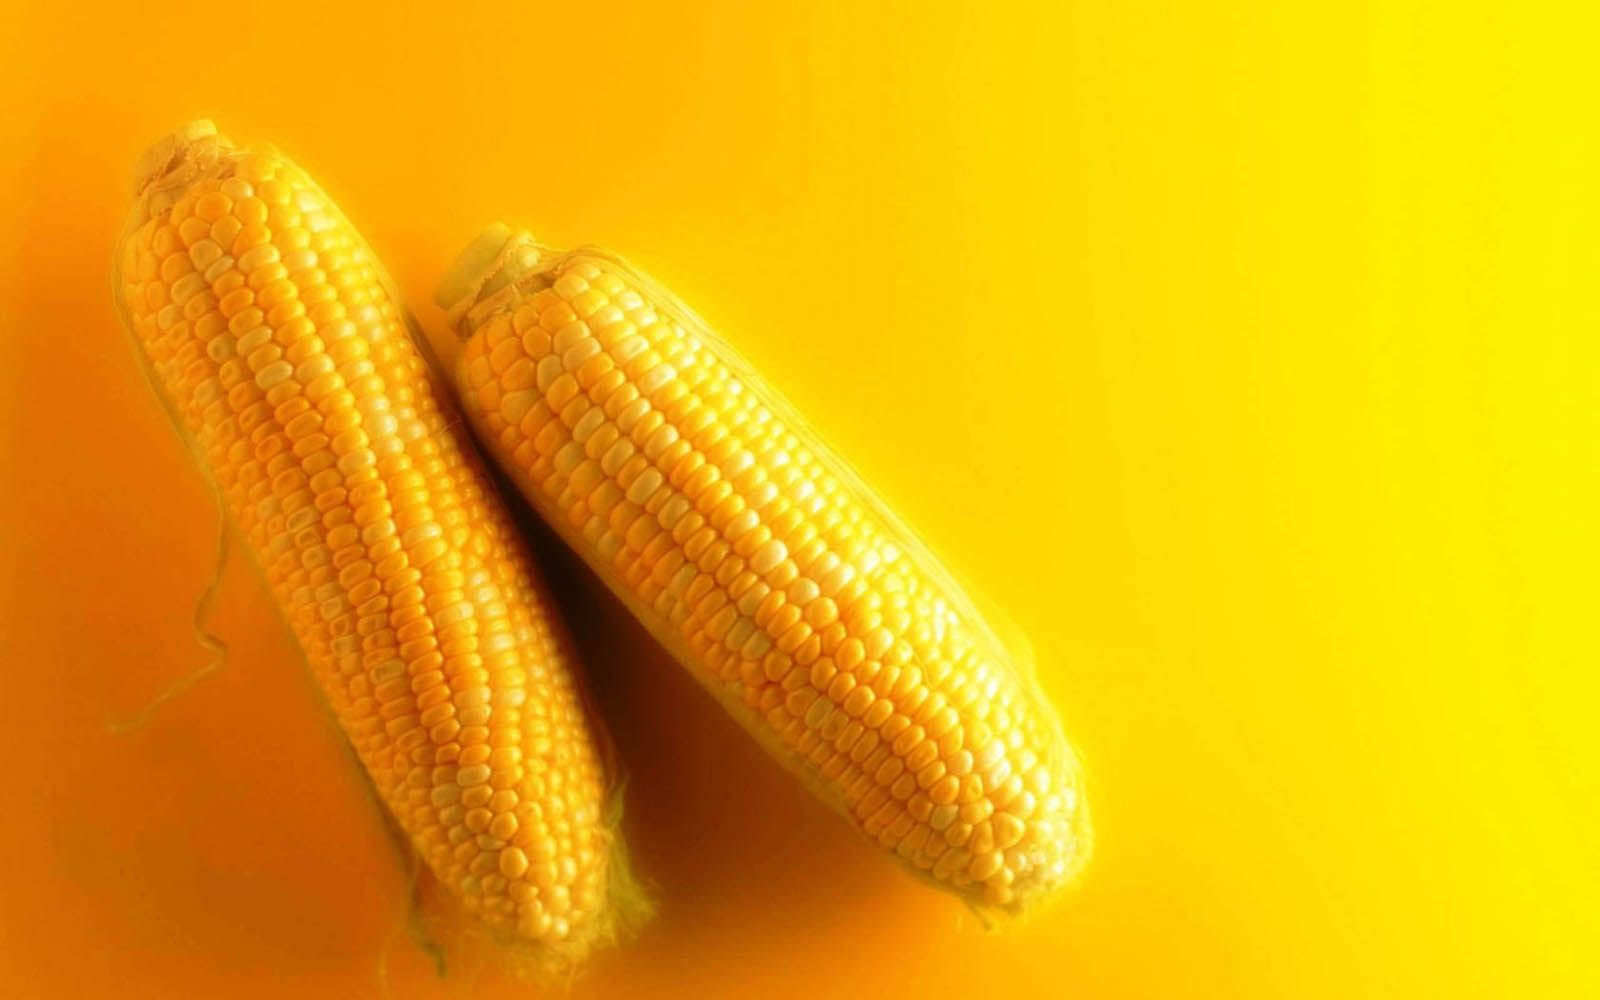 Wallpaper Picture Gallery: Fresh Corn